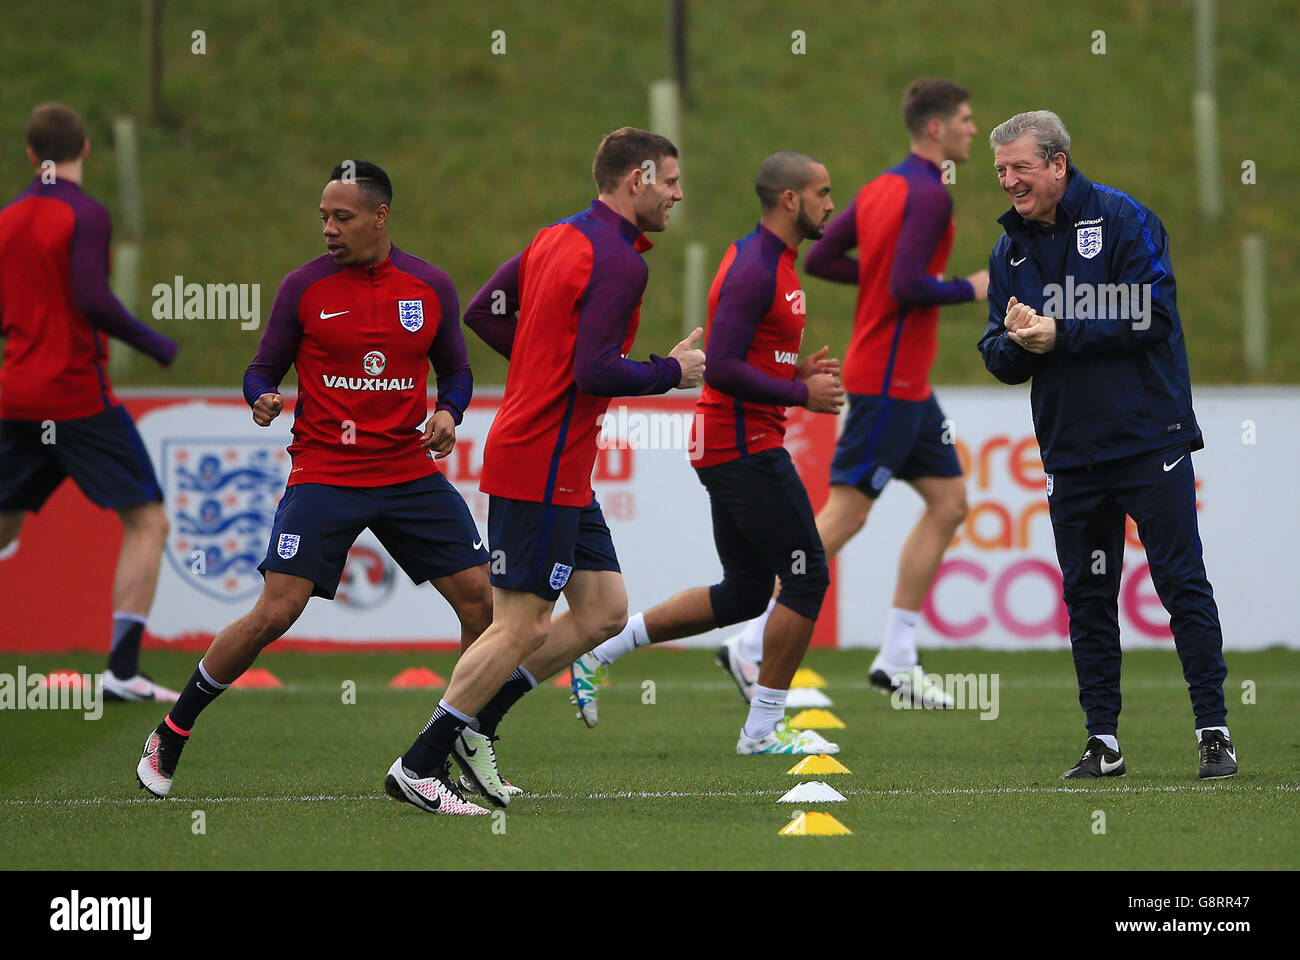 Allemagne / Angleterre - match amical - Angleterre Session de formation - St George's Park Banque D'Images